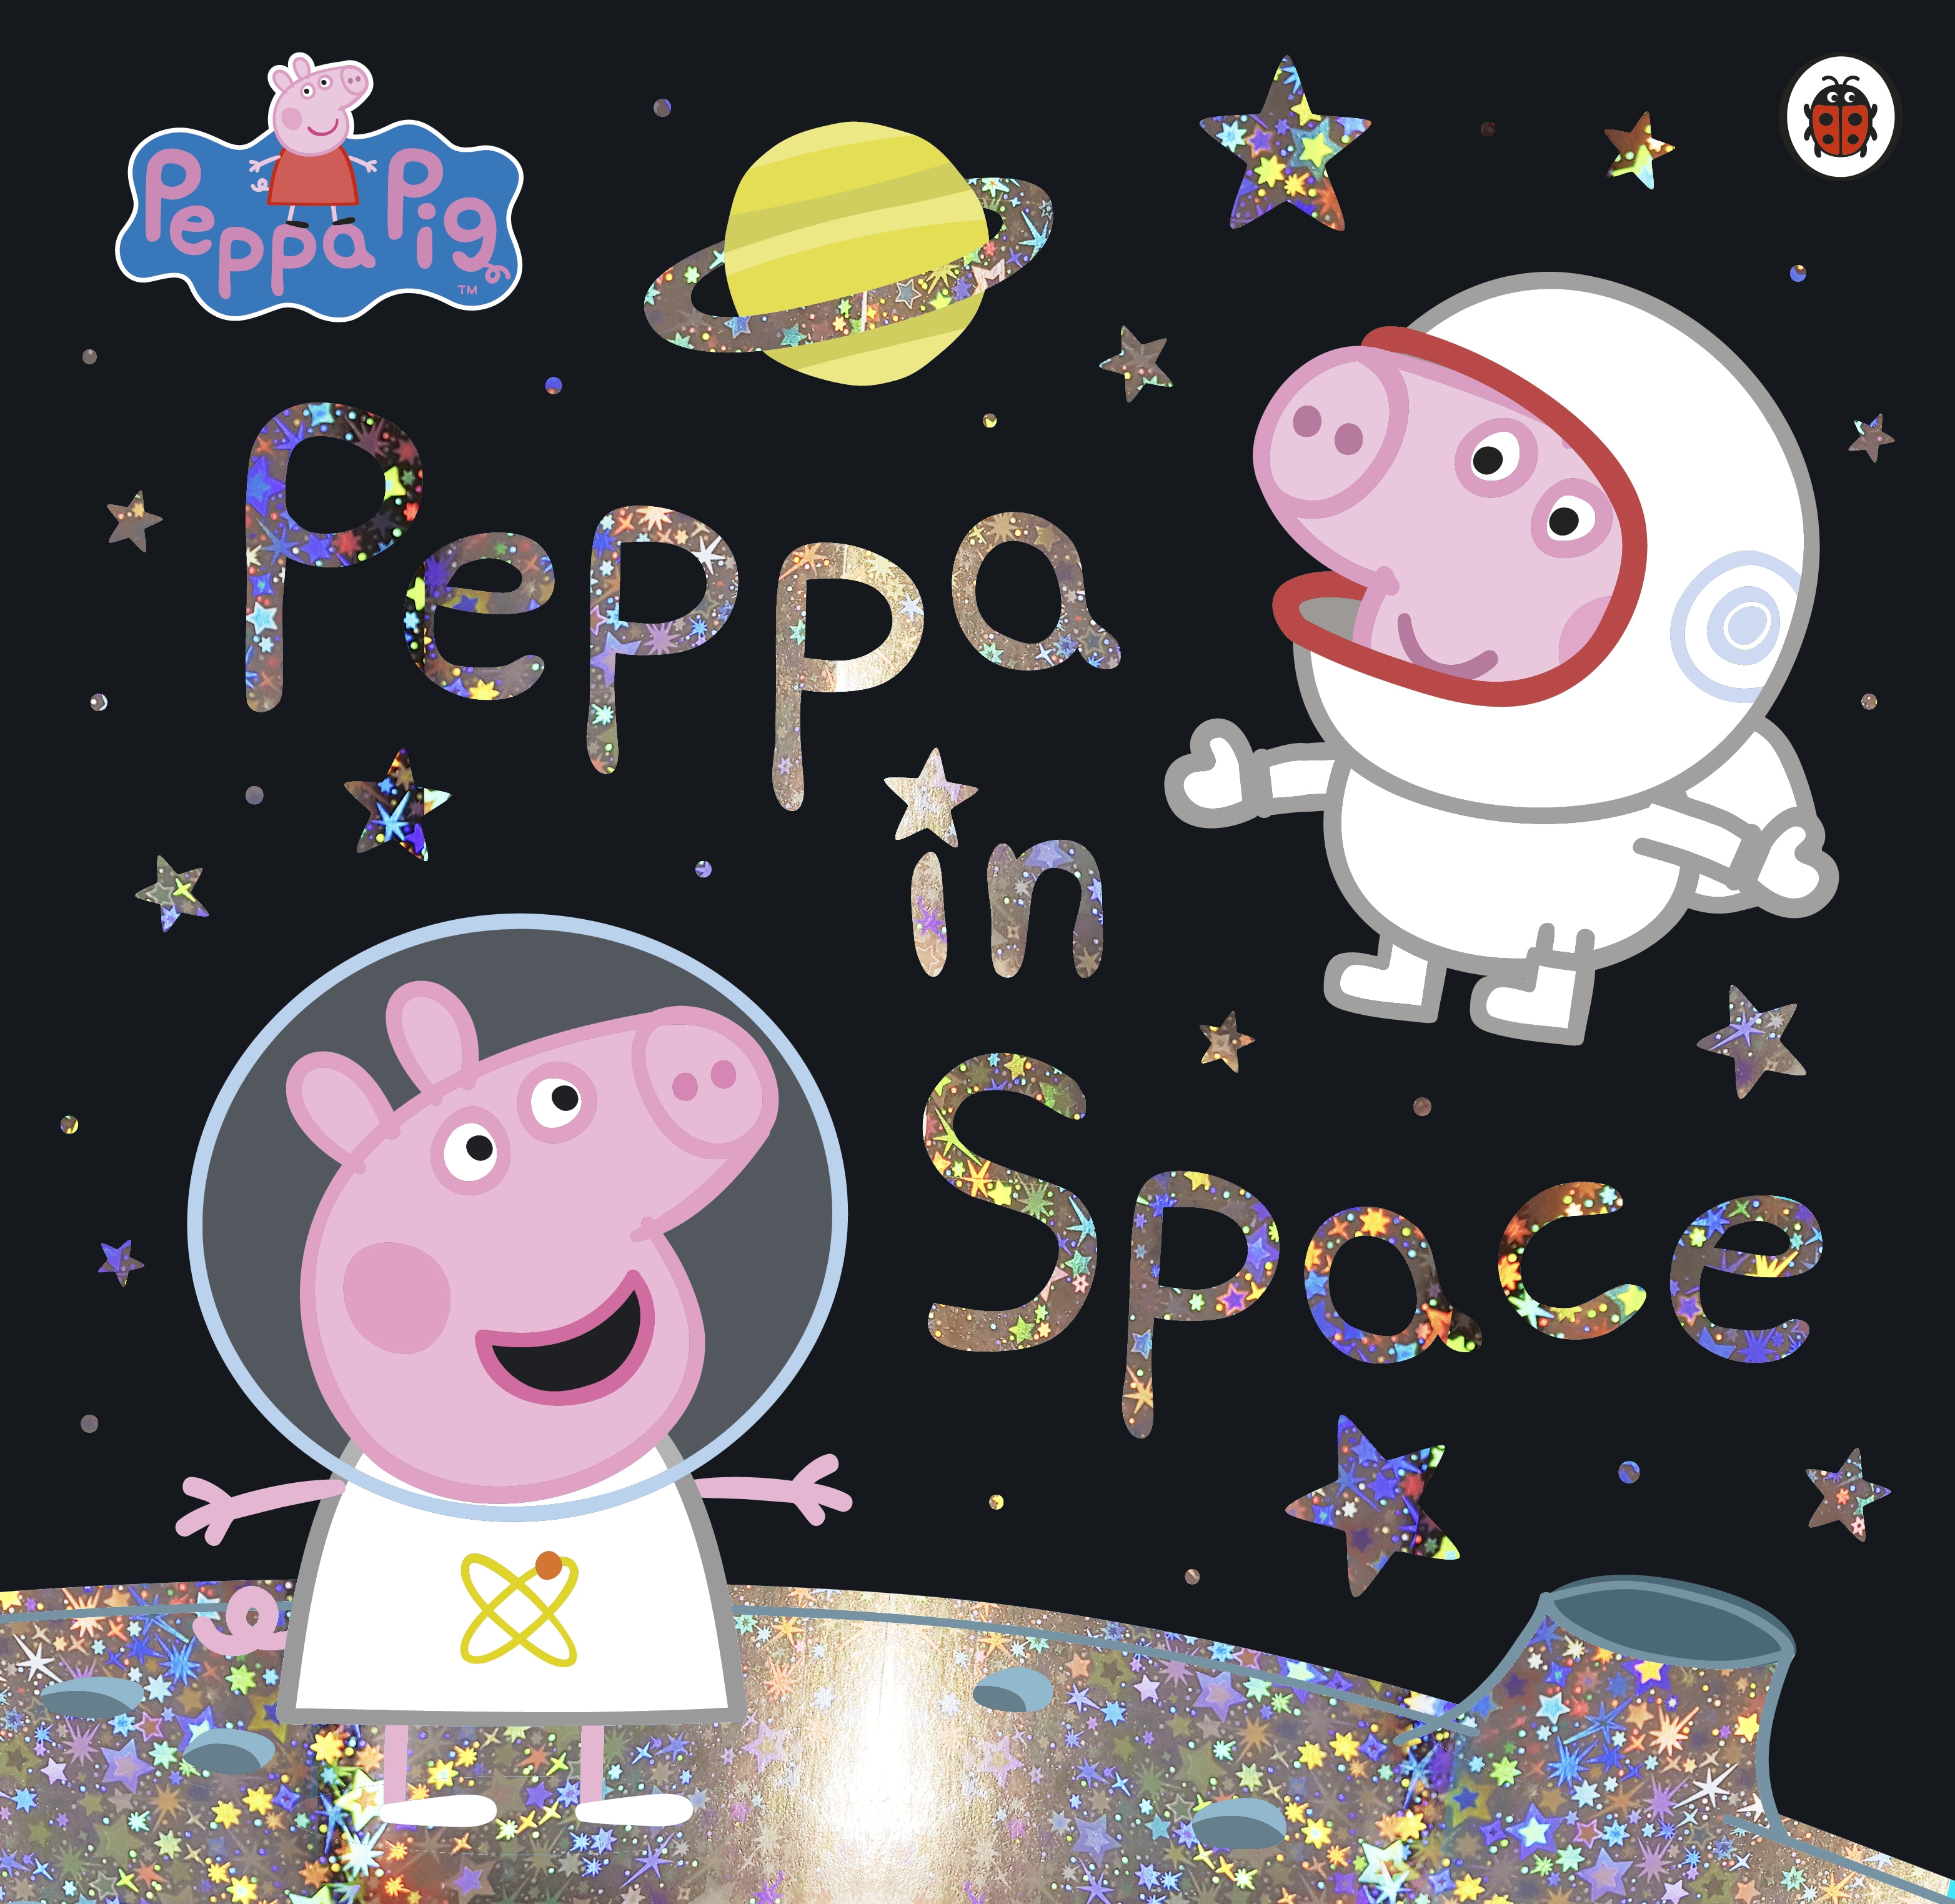 Peppa In Space book cover